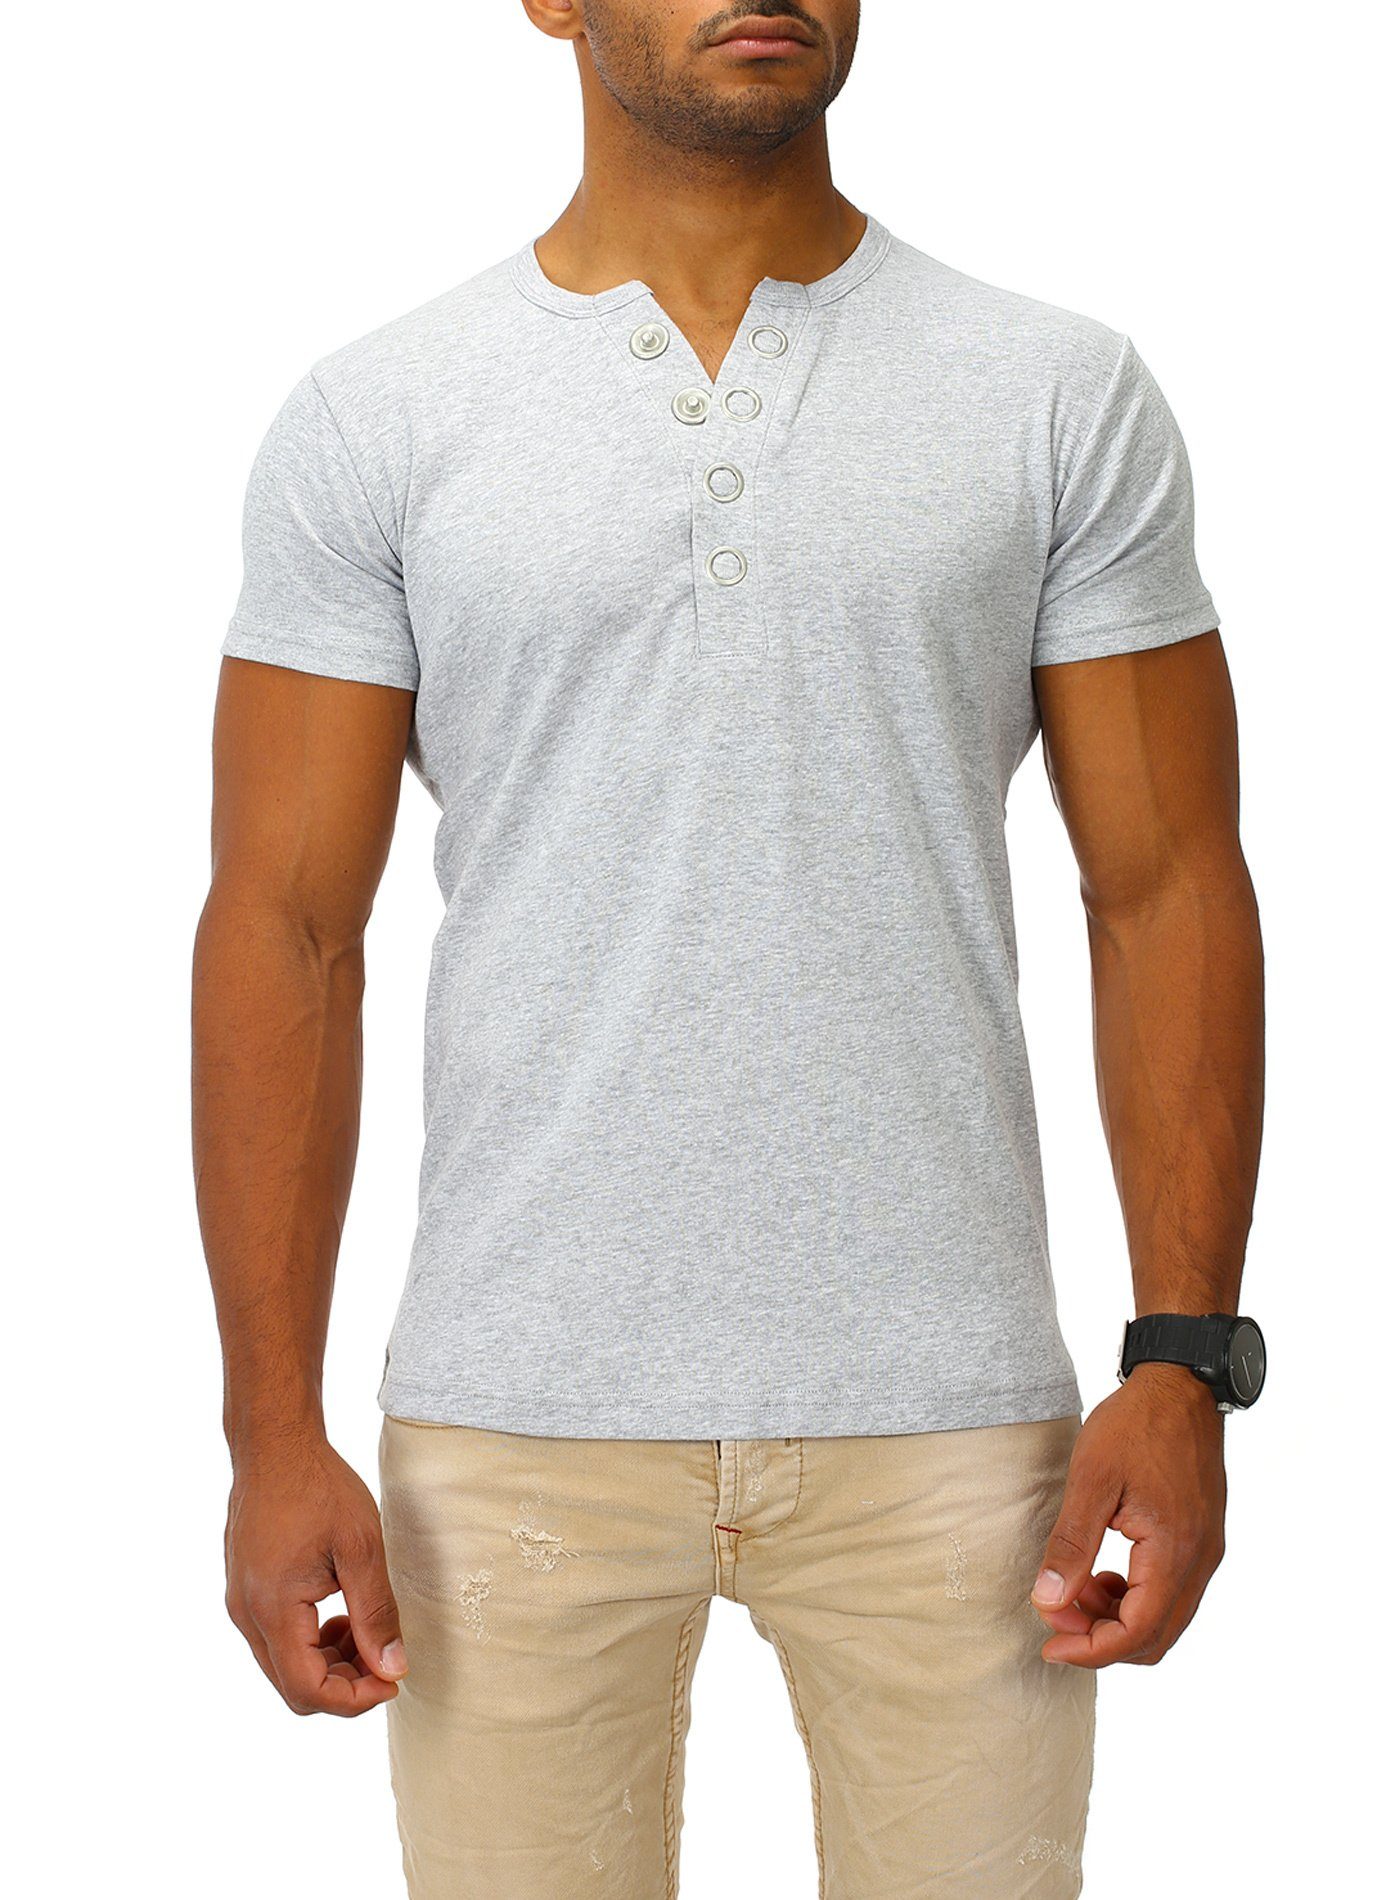 Joe Franks T-Shirt Big Slim grey Fit melange Button stylischem in